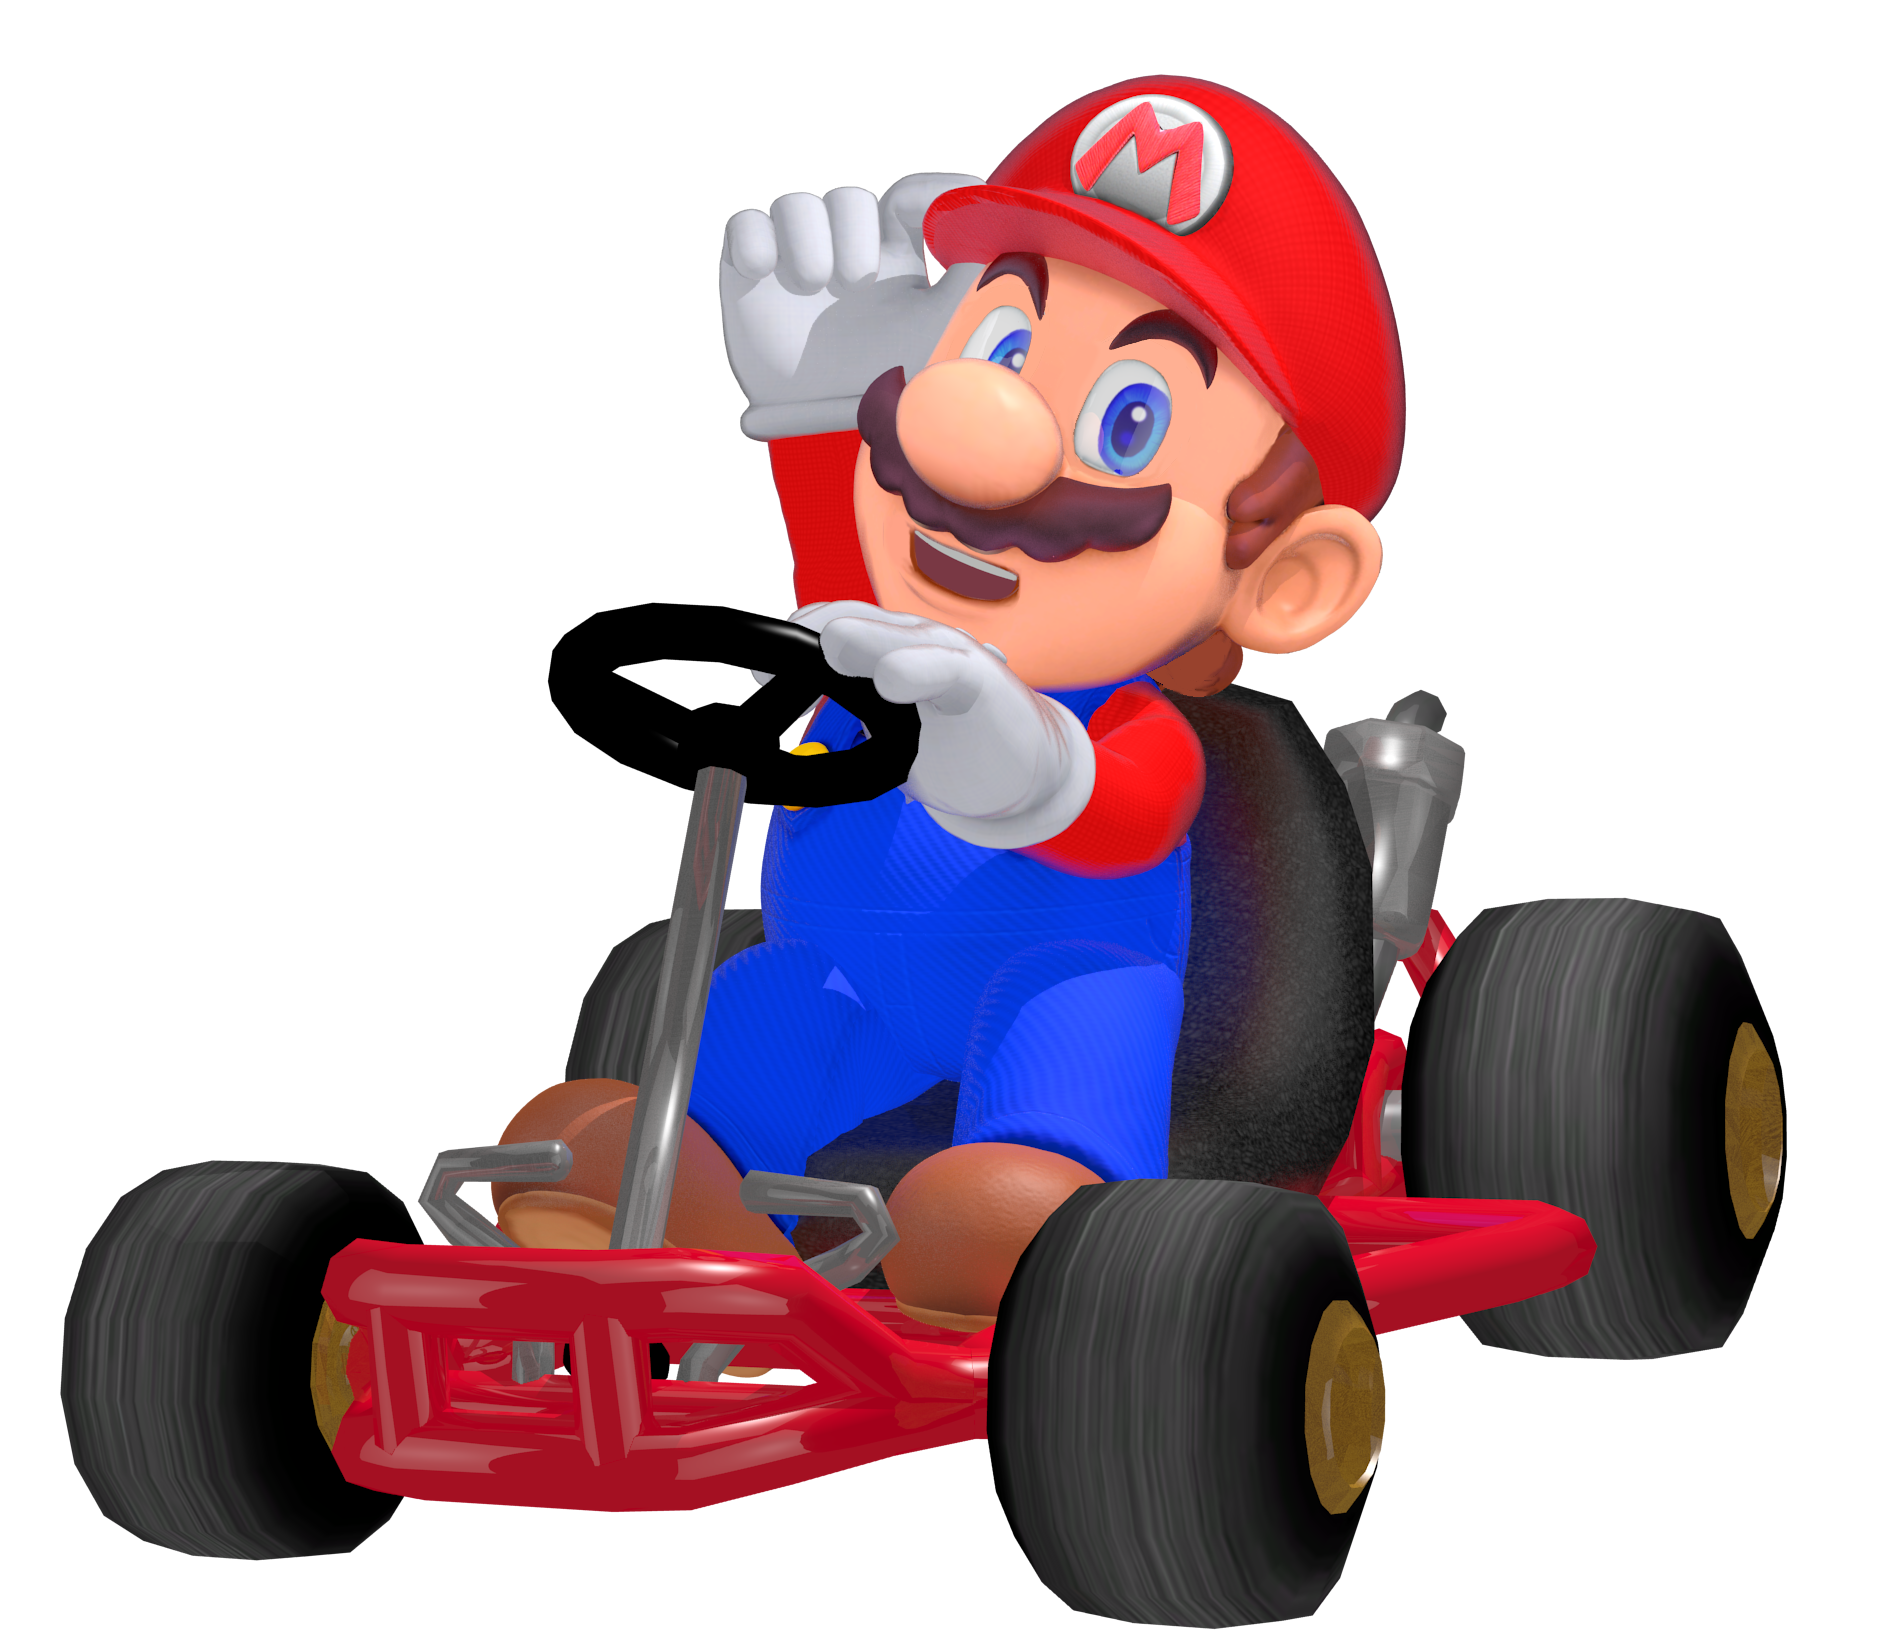 Mario Kart Tour - PNG by jt0328 on DeviantArt